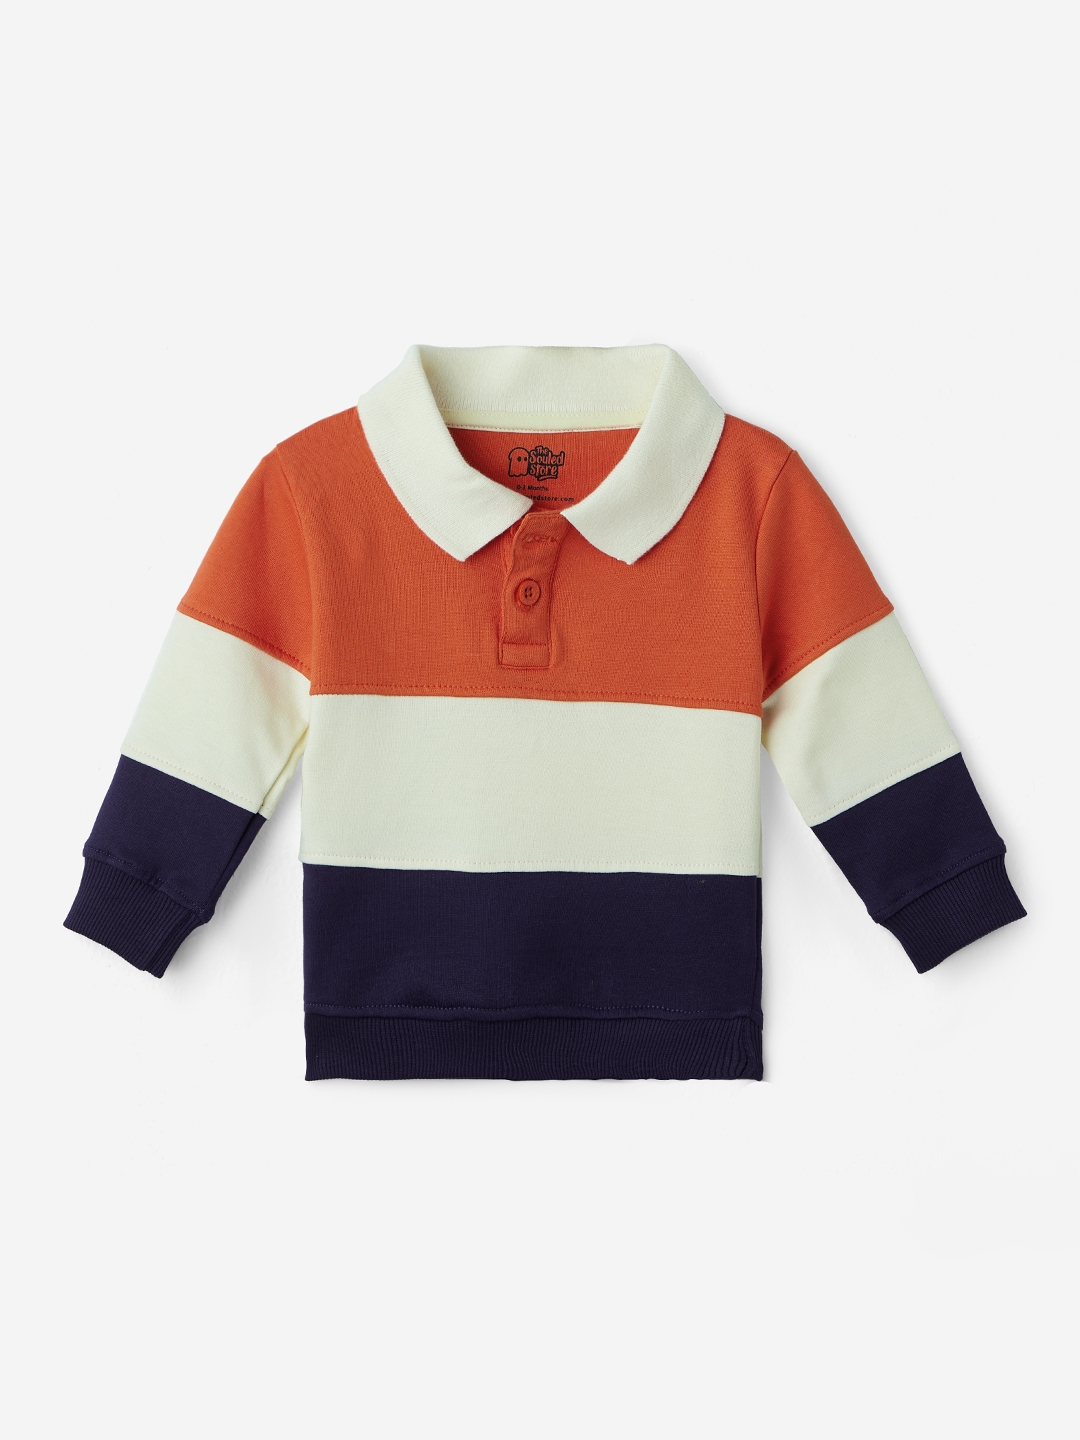 Boys TSS Originals: Colour Crush Boys Sweatshirts